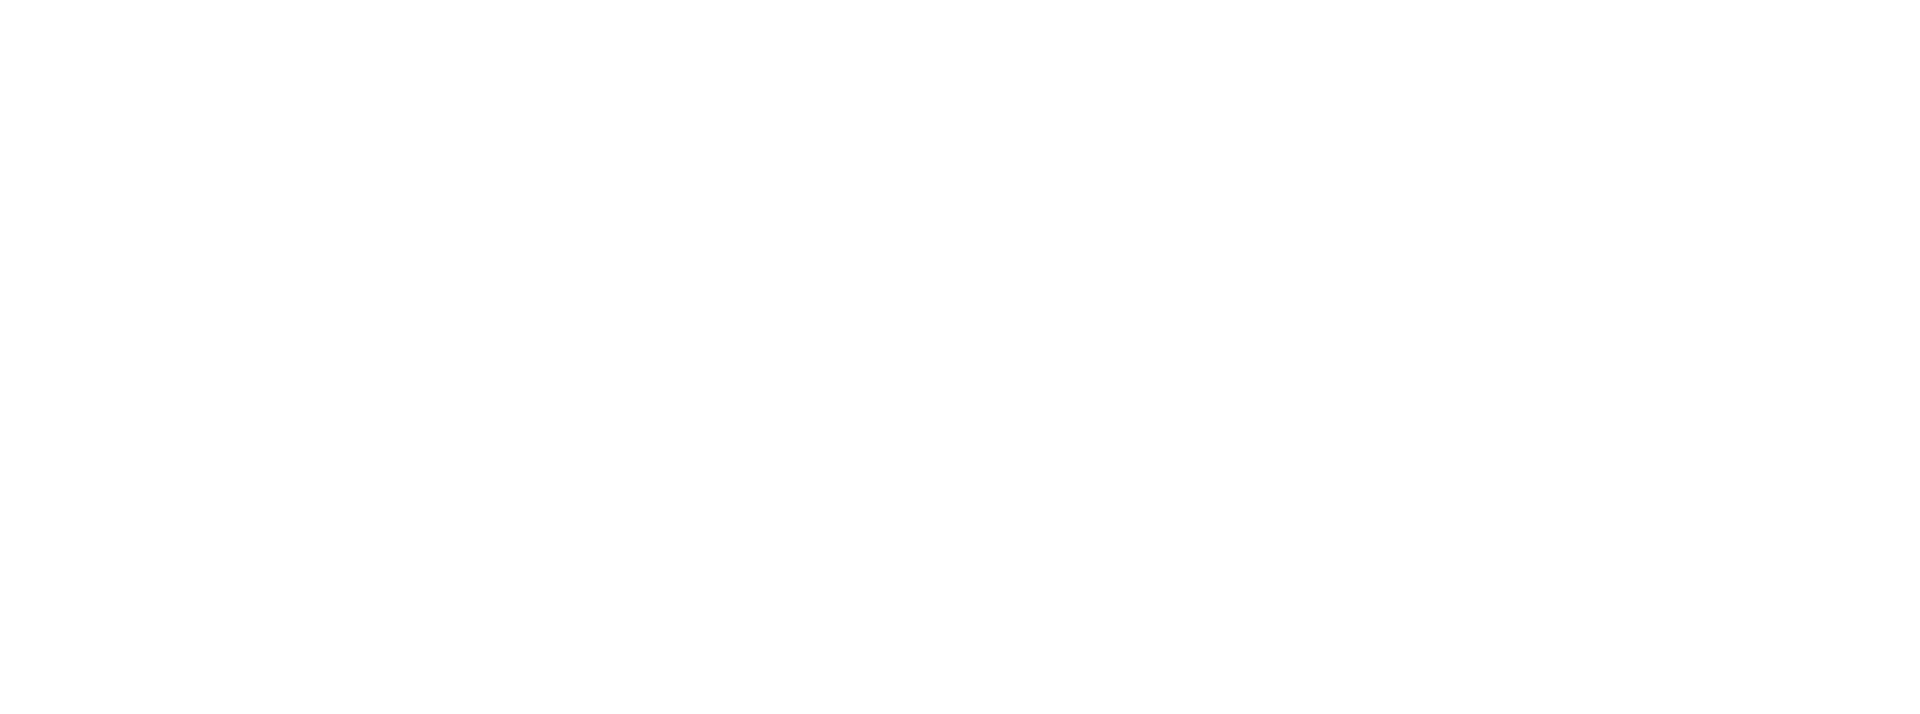 DeHavilland healthcare recruitment logo dark theme